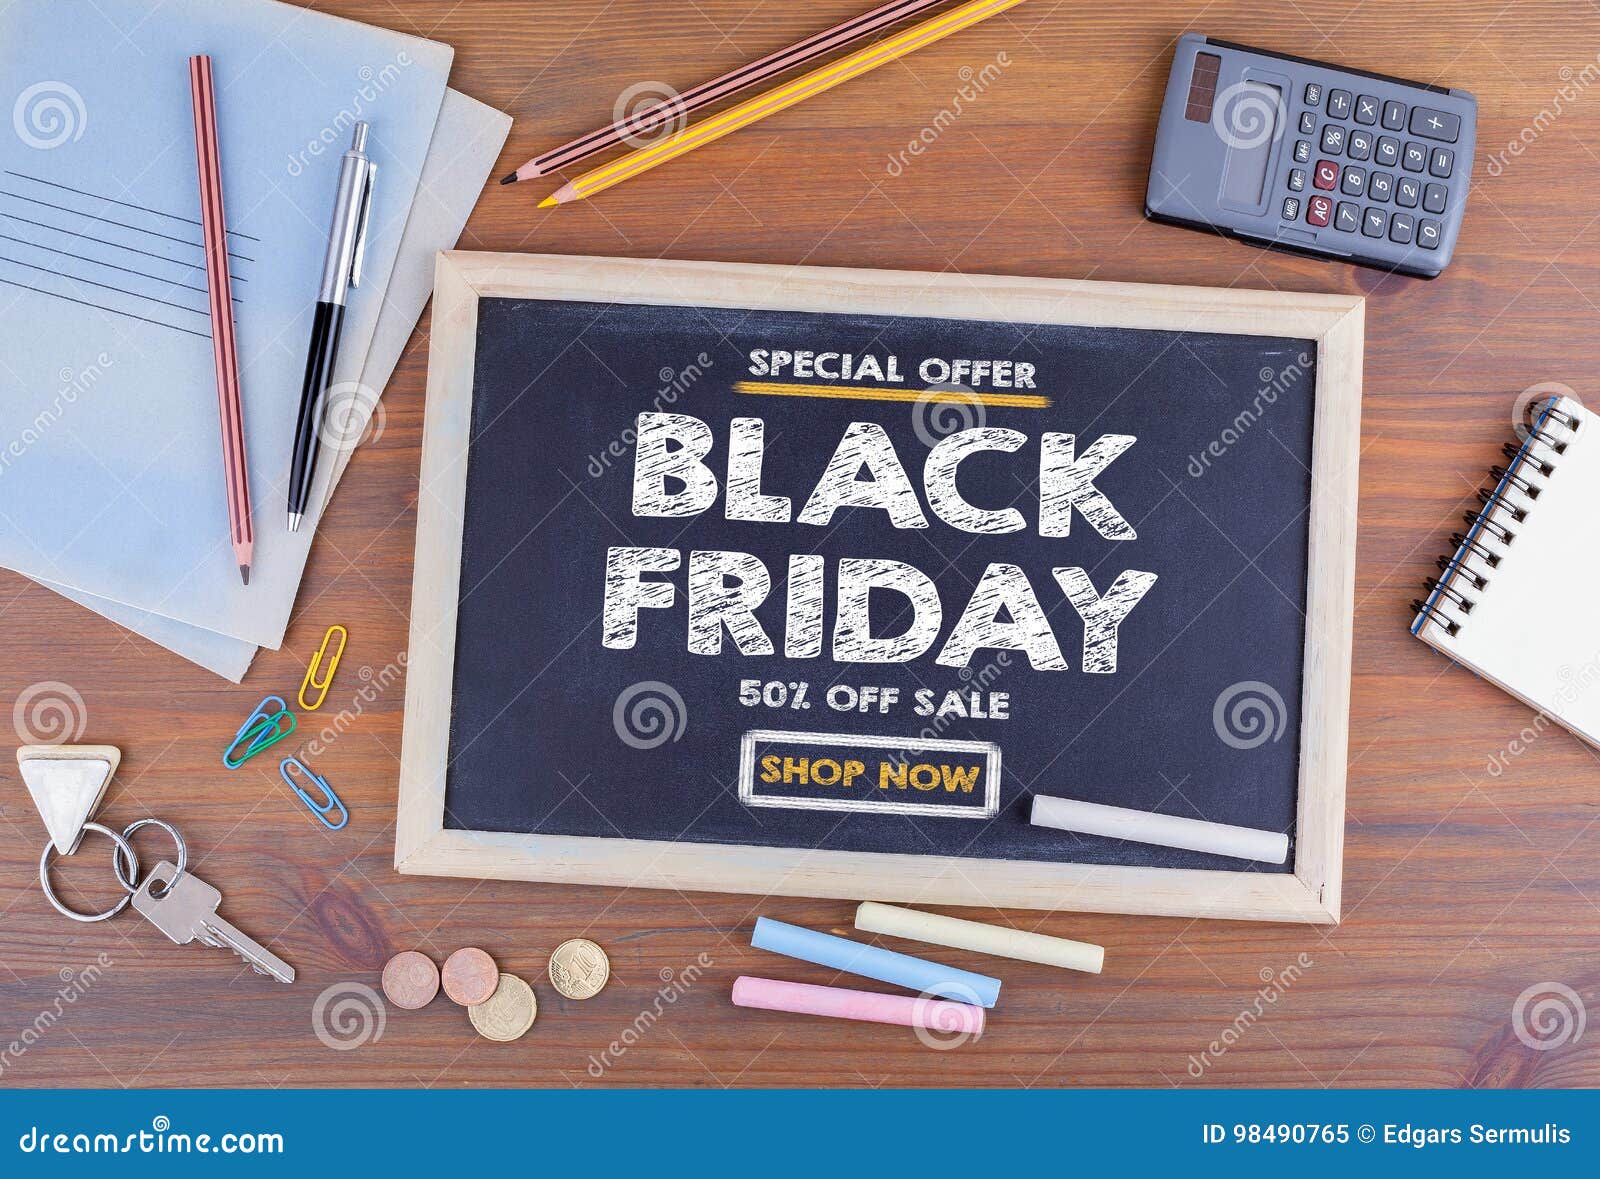 Black Friday Sale Chalkboard On Wooden Office Desk Stock Image